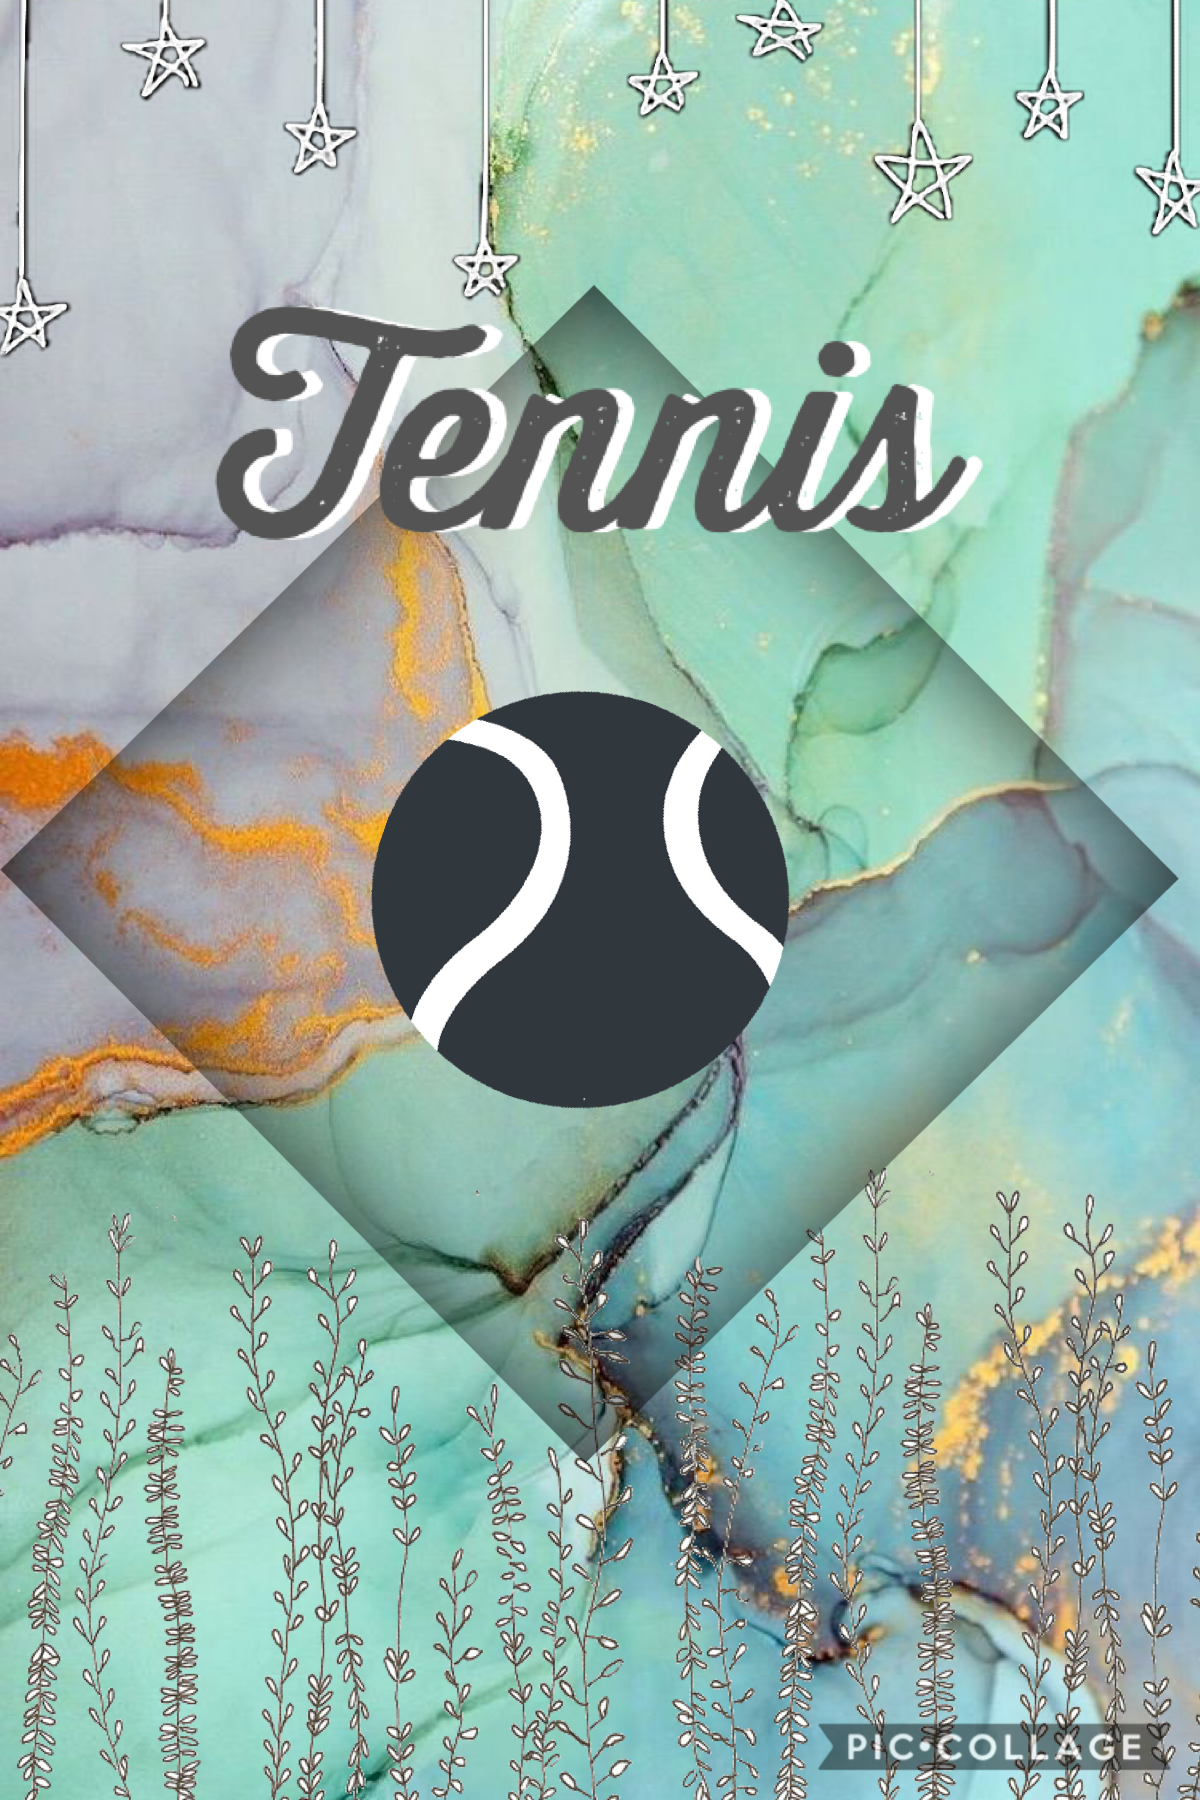 Yay Tennis!